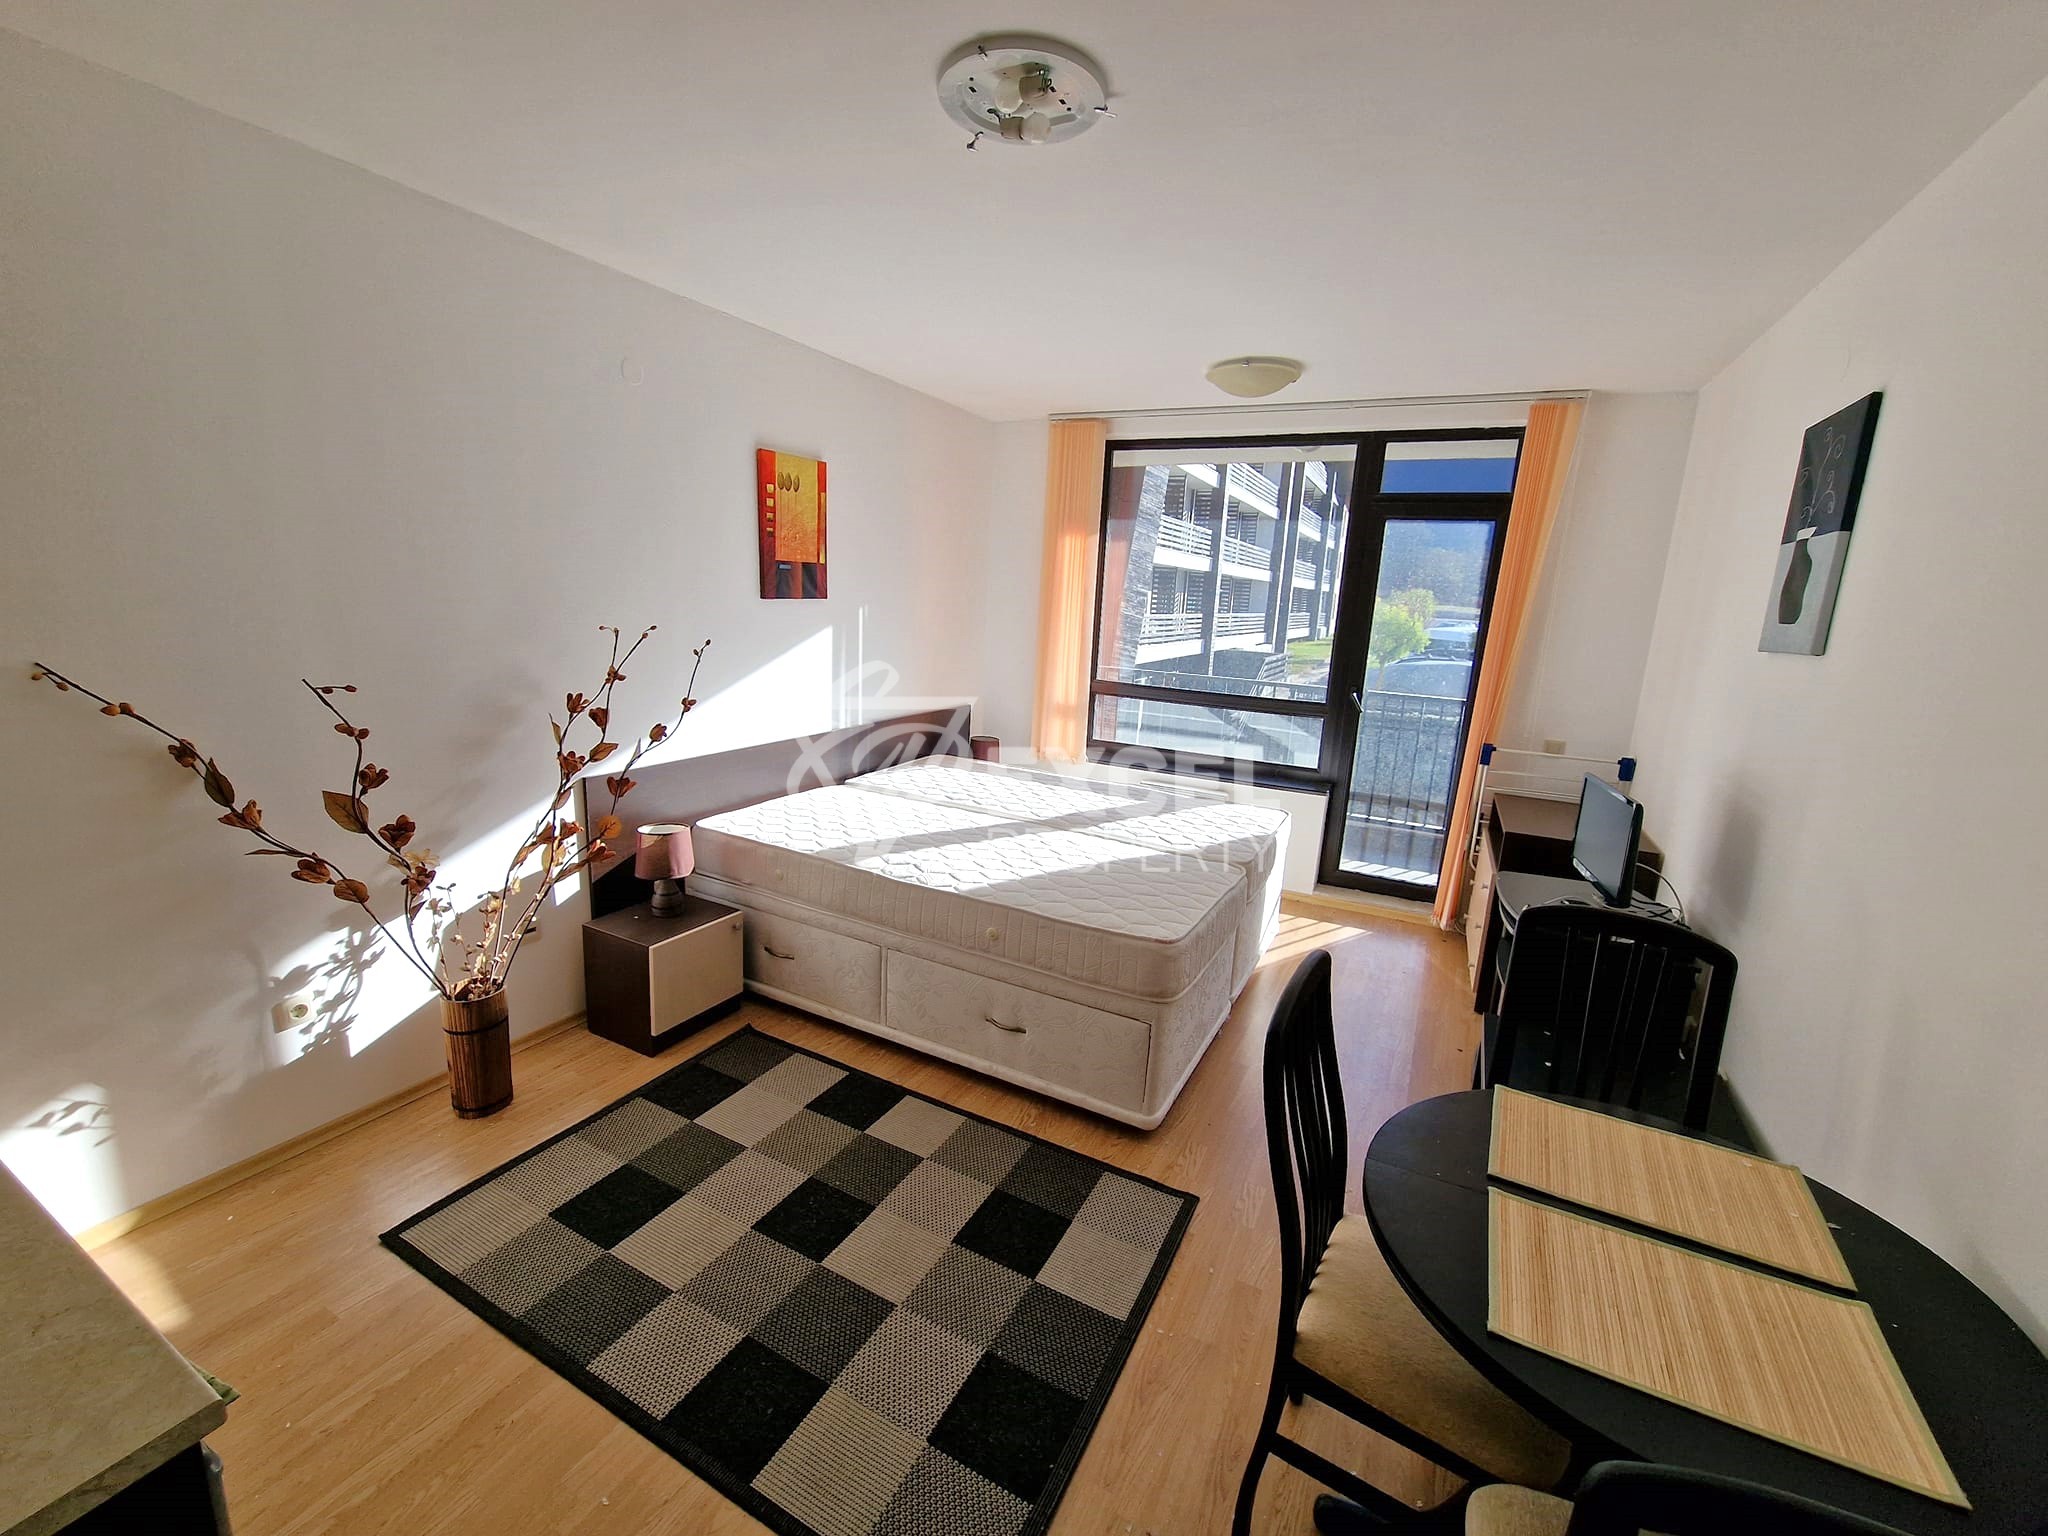 Two bedroom apartment (maisonette) for sale in the Aspen Valley complex near Razlog